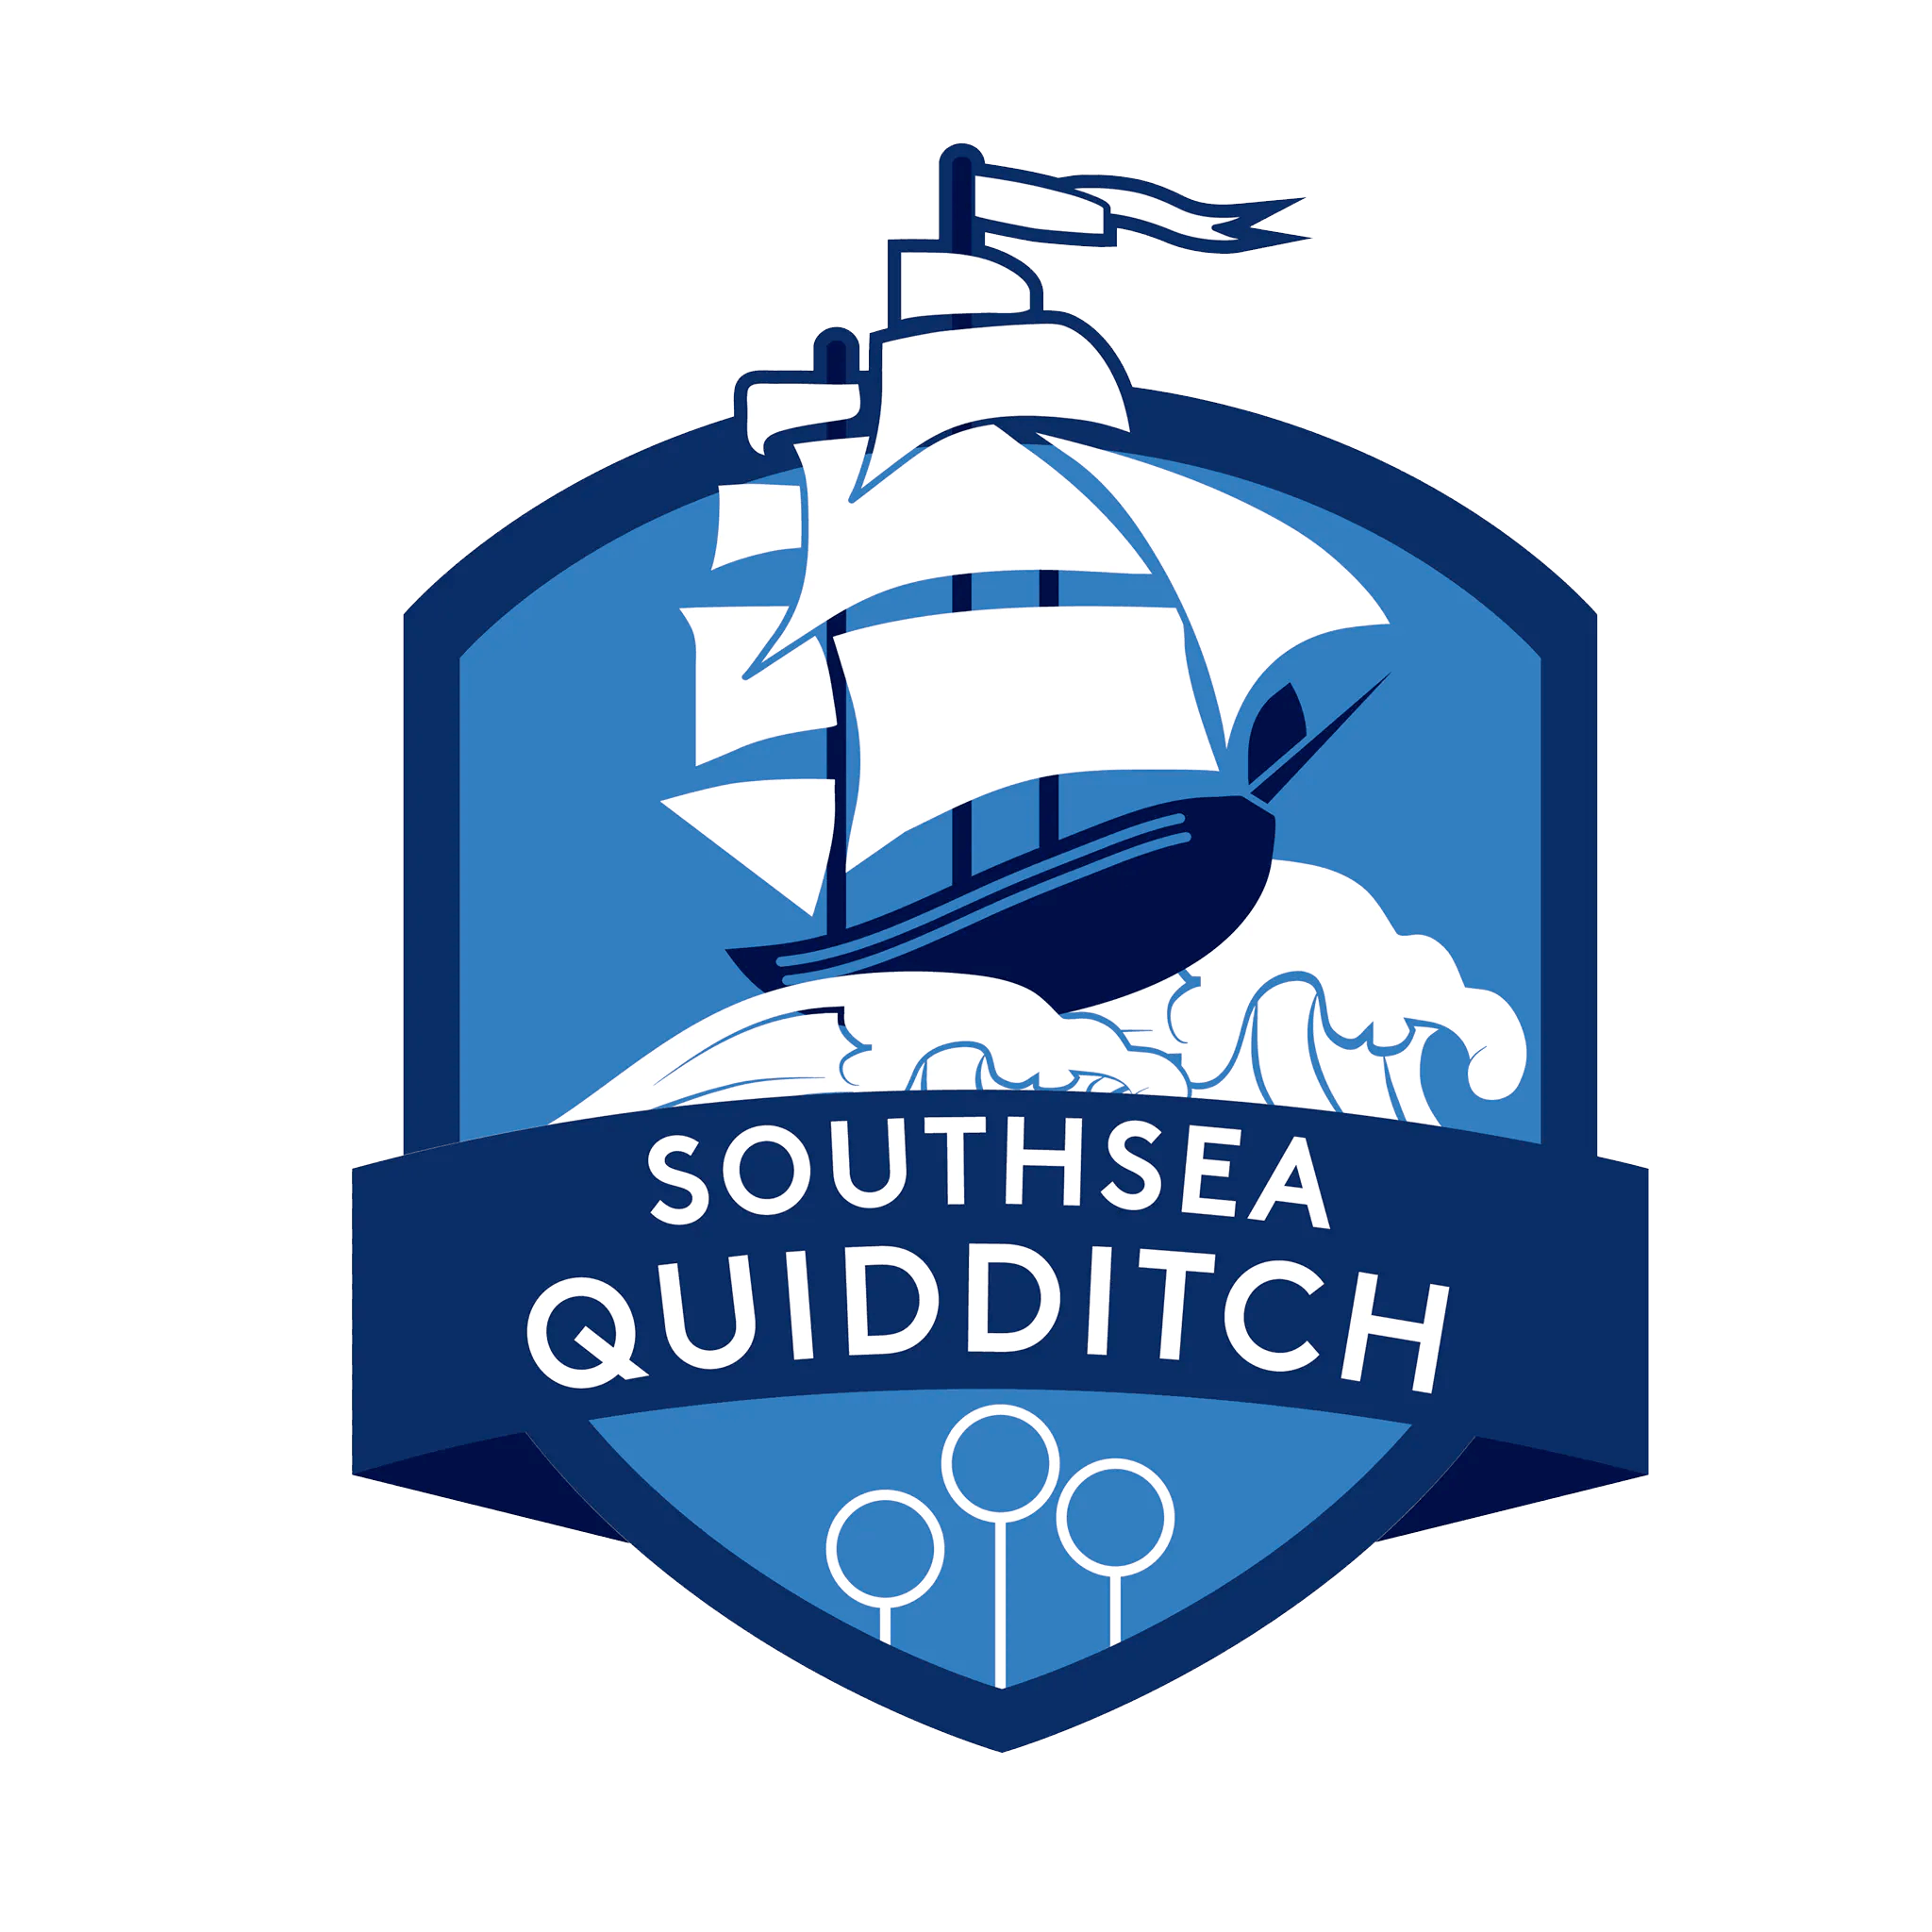 Southsea Quidditch logo